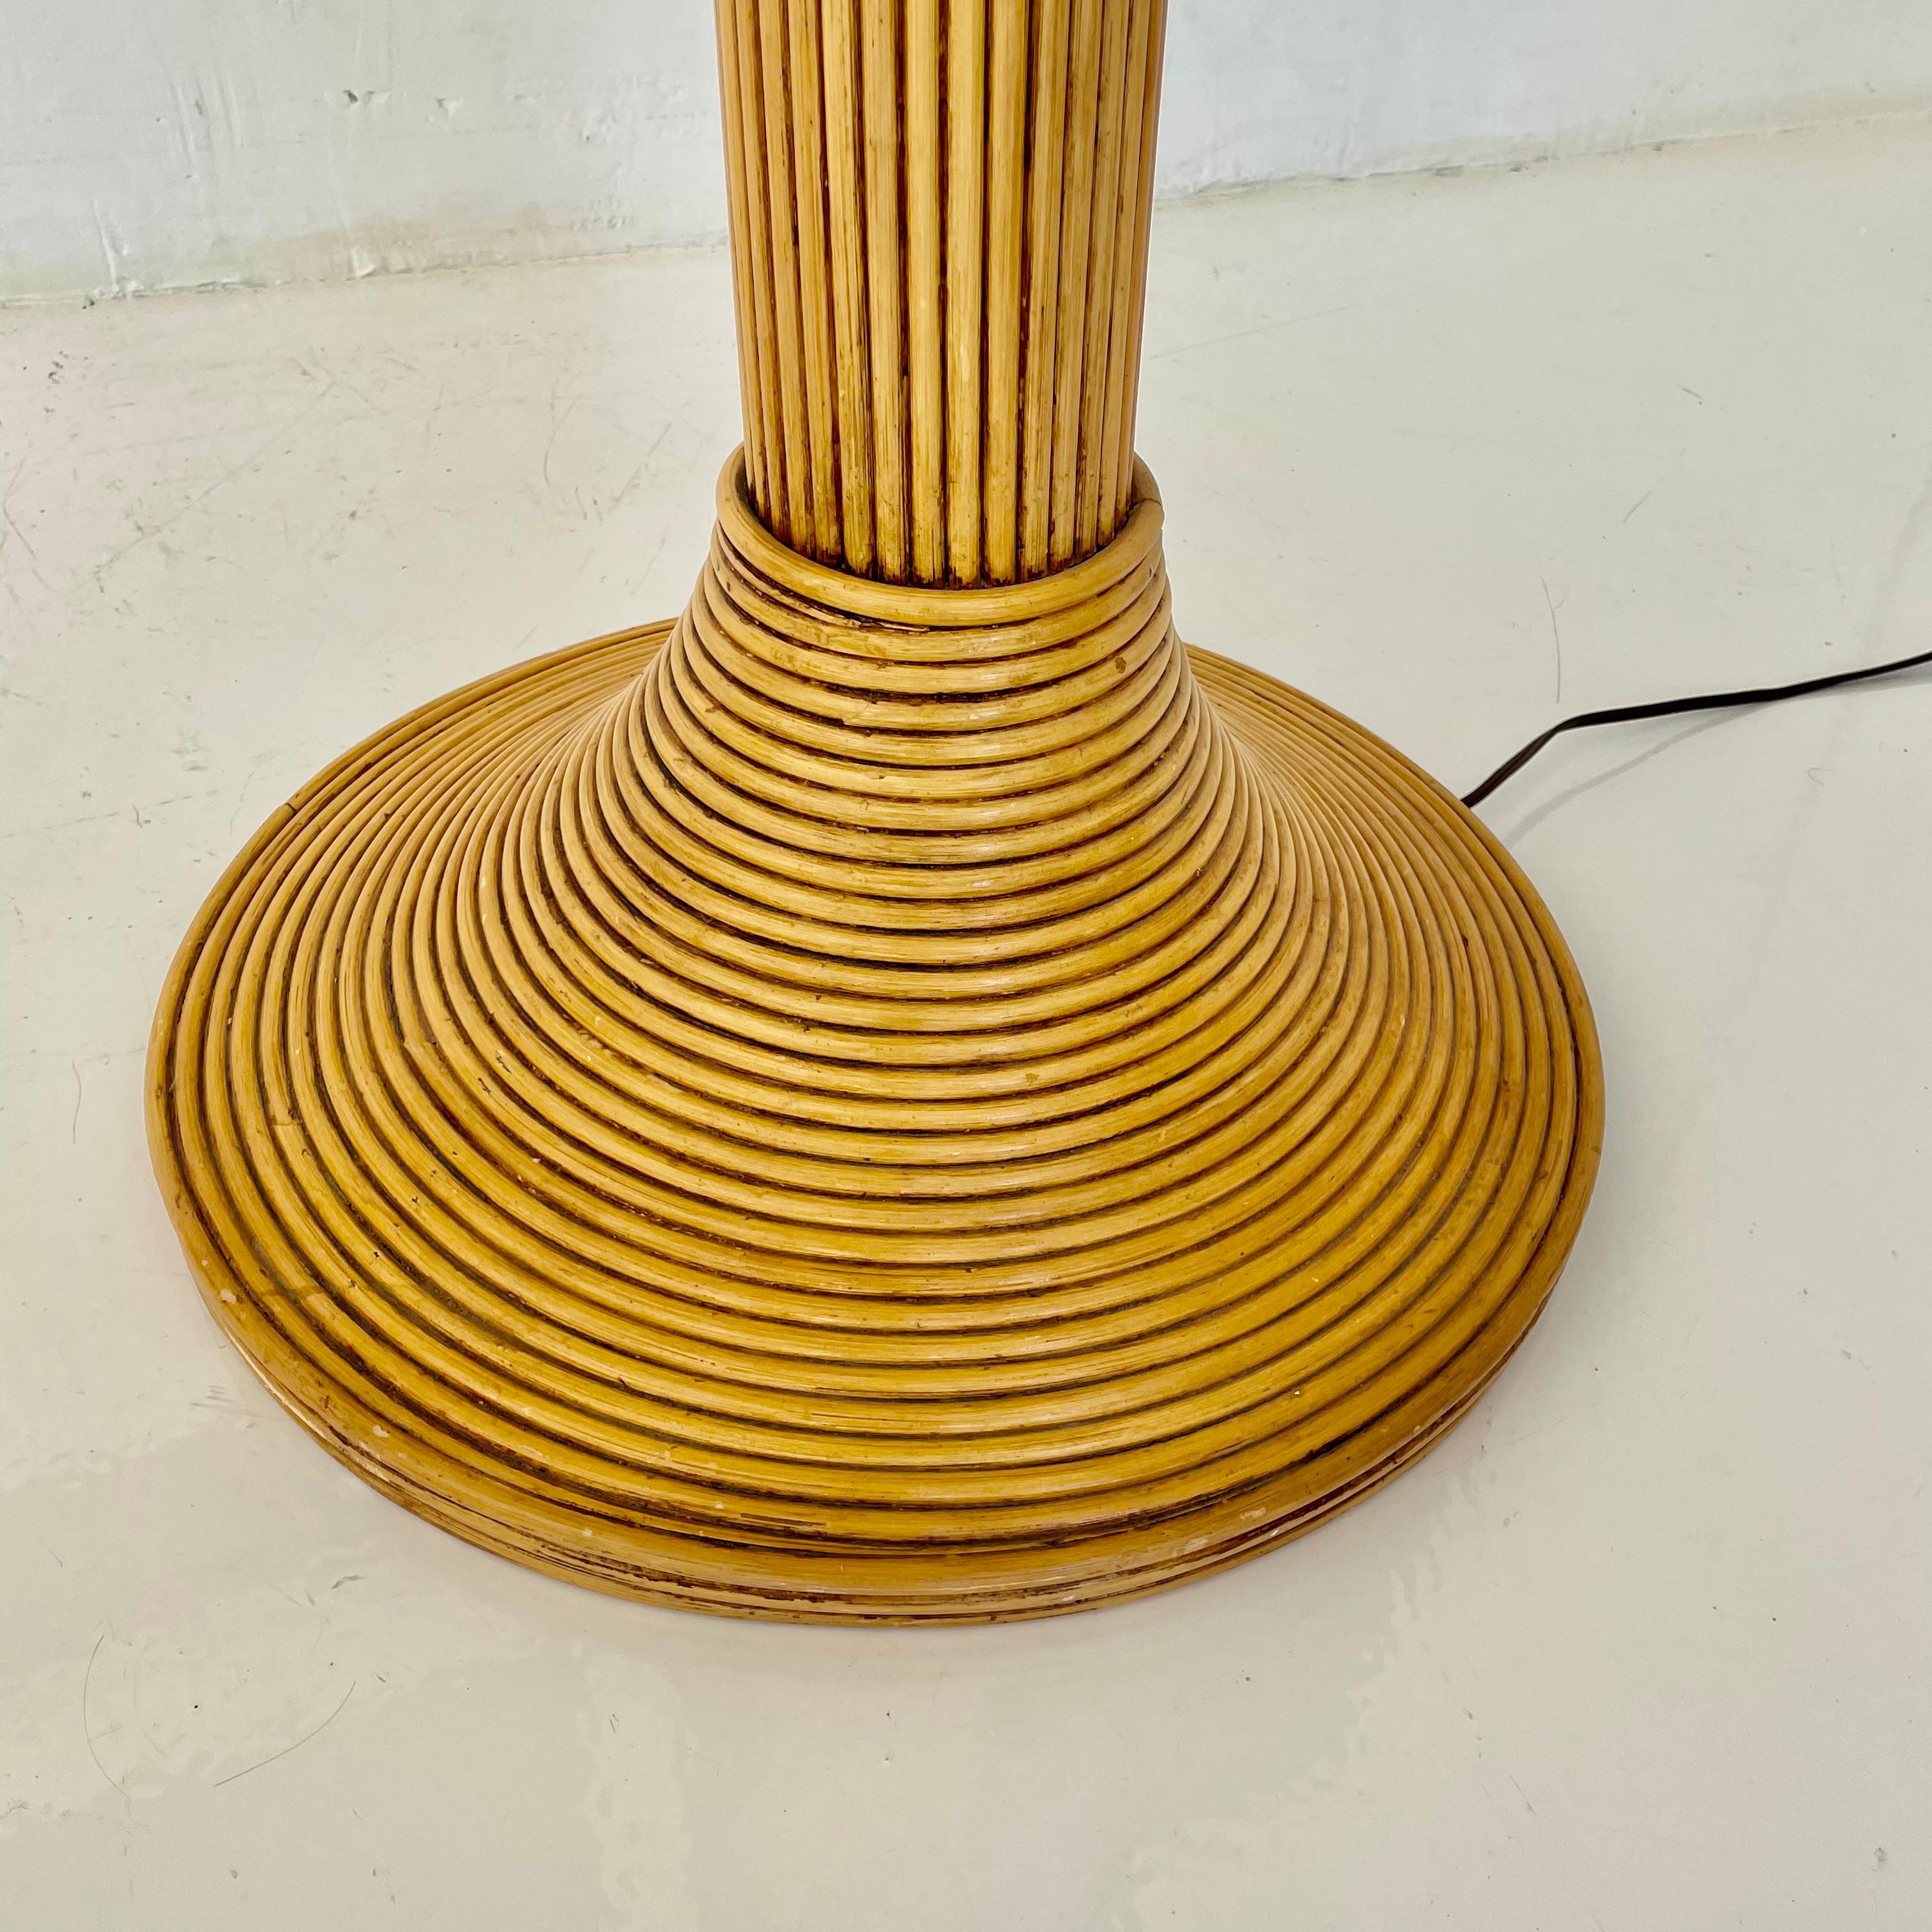 Rattan and Wicker Palm Tree Floor Lamp 7